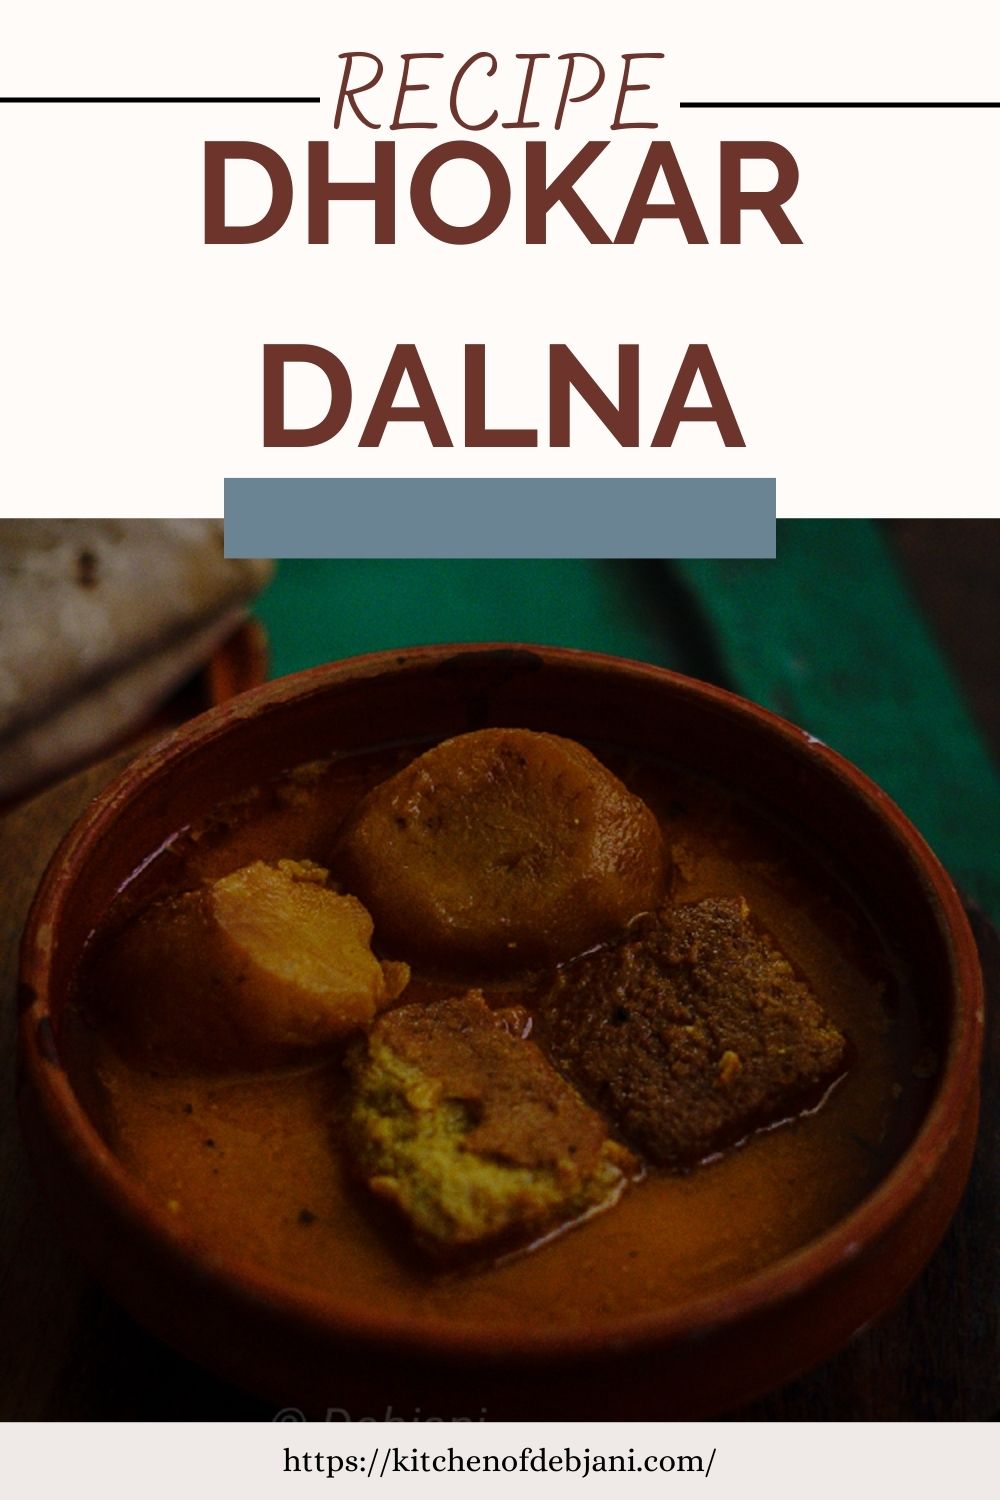 %Bengali Dhokar Dalna recipe debjanir rannaghar Photo Food Pinterest Pin